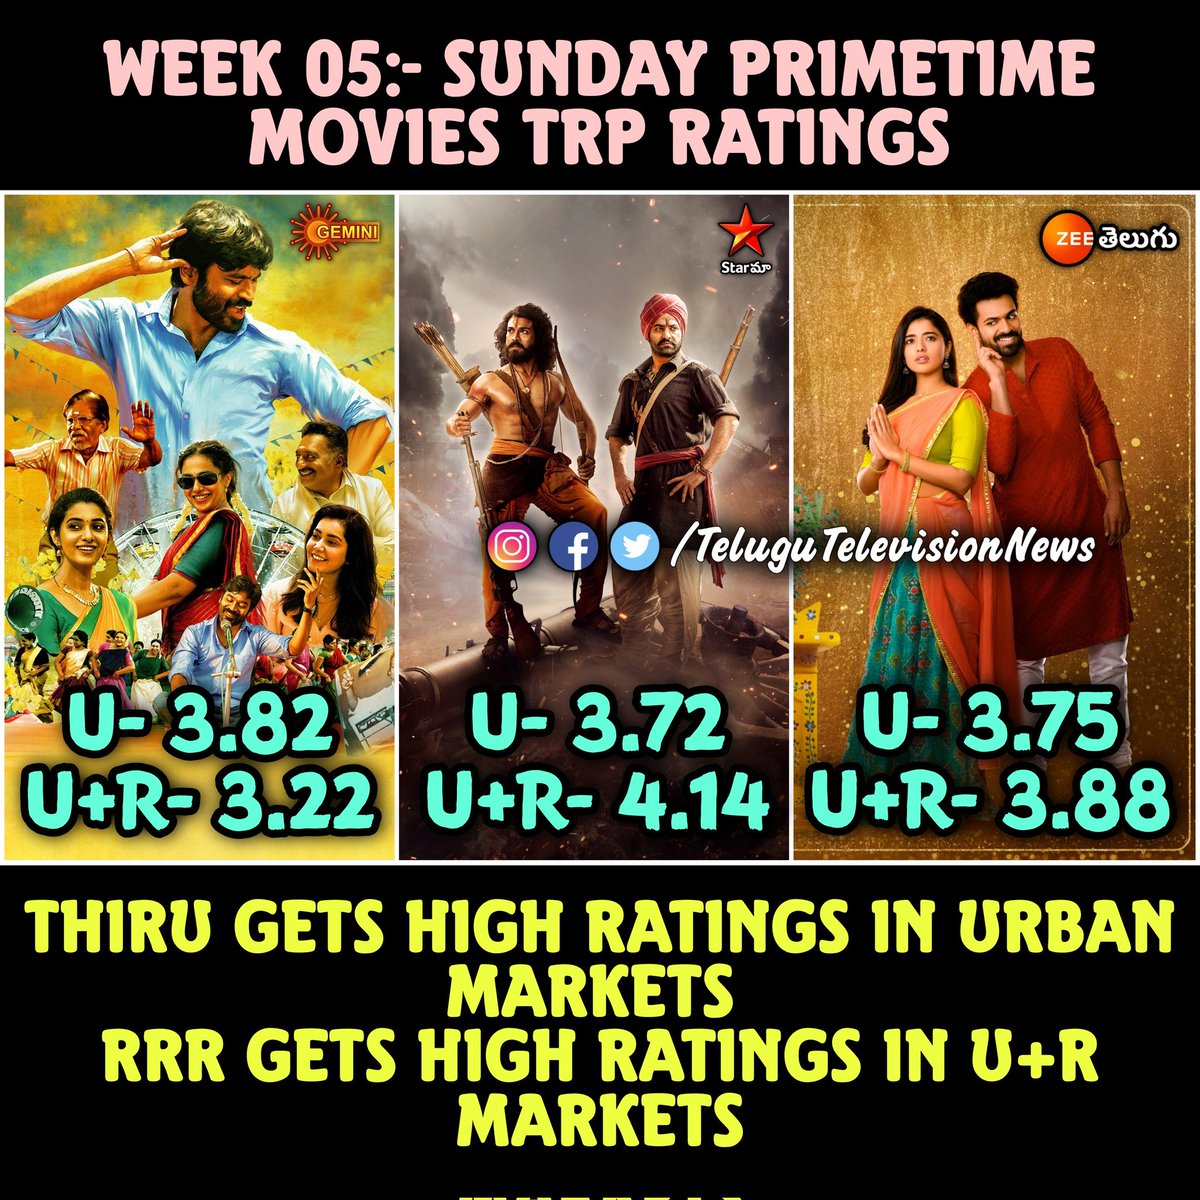 Week 05:- Sunday Primetime Movies TRP Ratings 

#Thiru Gets High TRP And Primetime Slot Leader In Urban Markets

#RRRMovie Gets High TRP And Primetime Slot Leader In U+R Markets 

#Dhanush #RamCharan #NTR #vaishnavtej #Vaathi #CaptainMiller #RC15 #NTR30 #pvt04